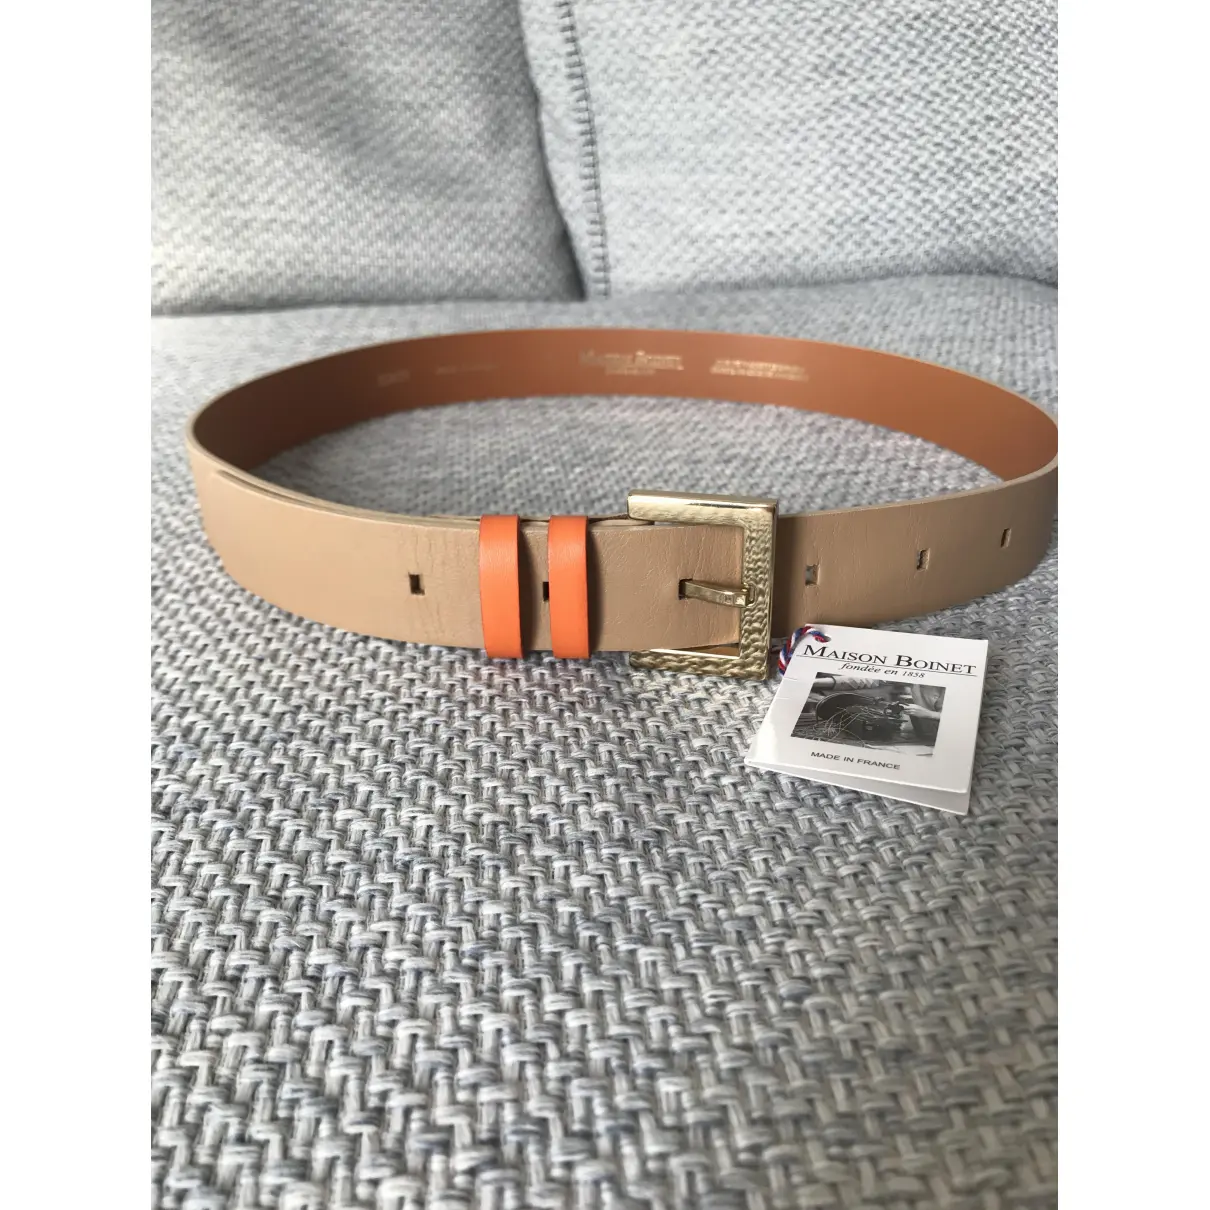 Buy Maison Boinet Leather belt online